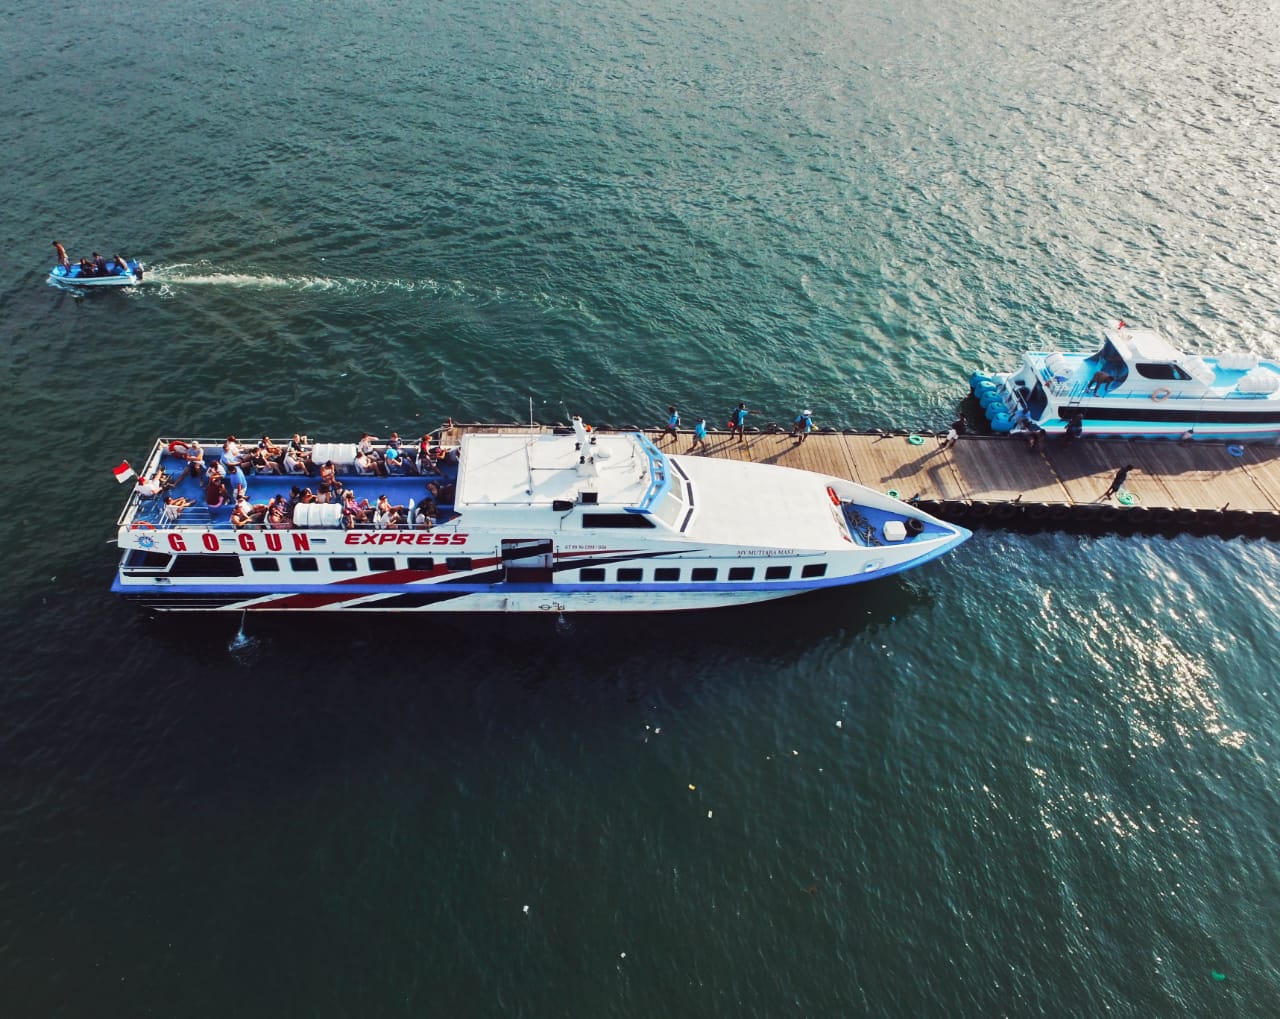 Gogun Express - Nusa Penida Fast boats